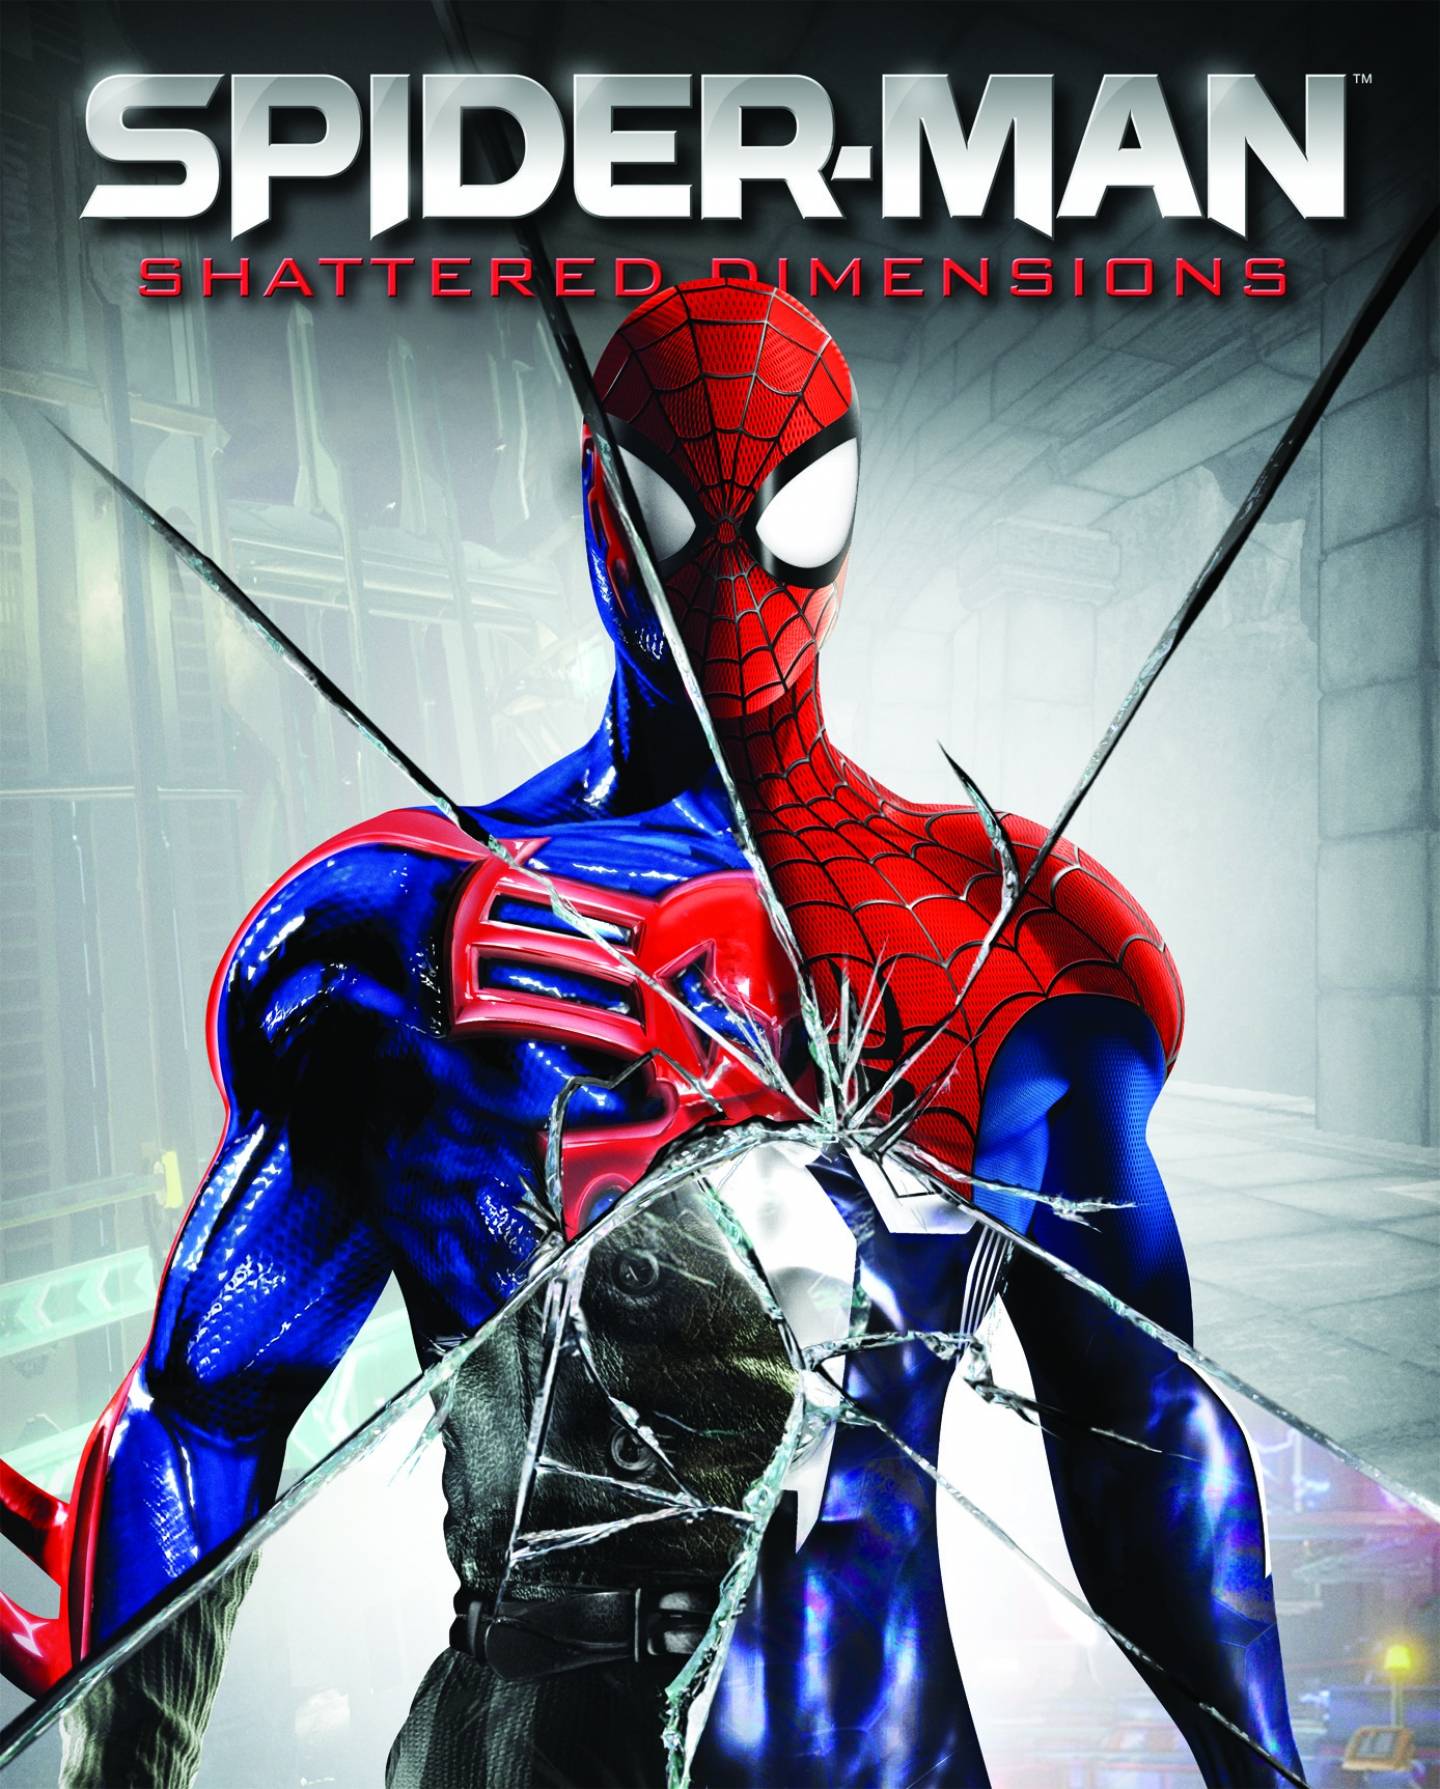 Spider Man Shattered Dimensions Wallpaper